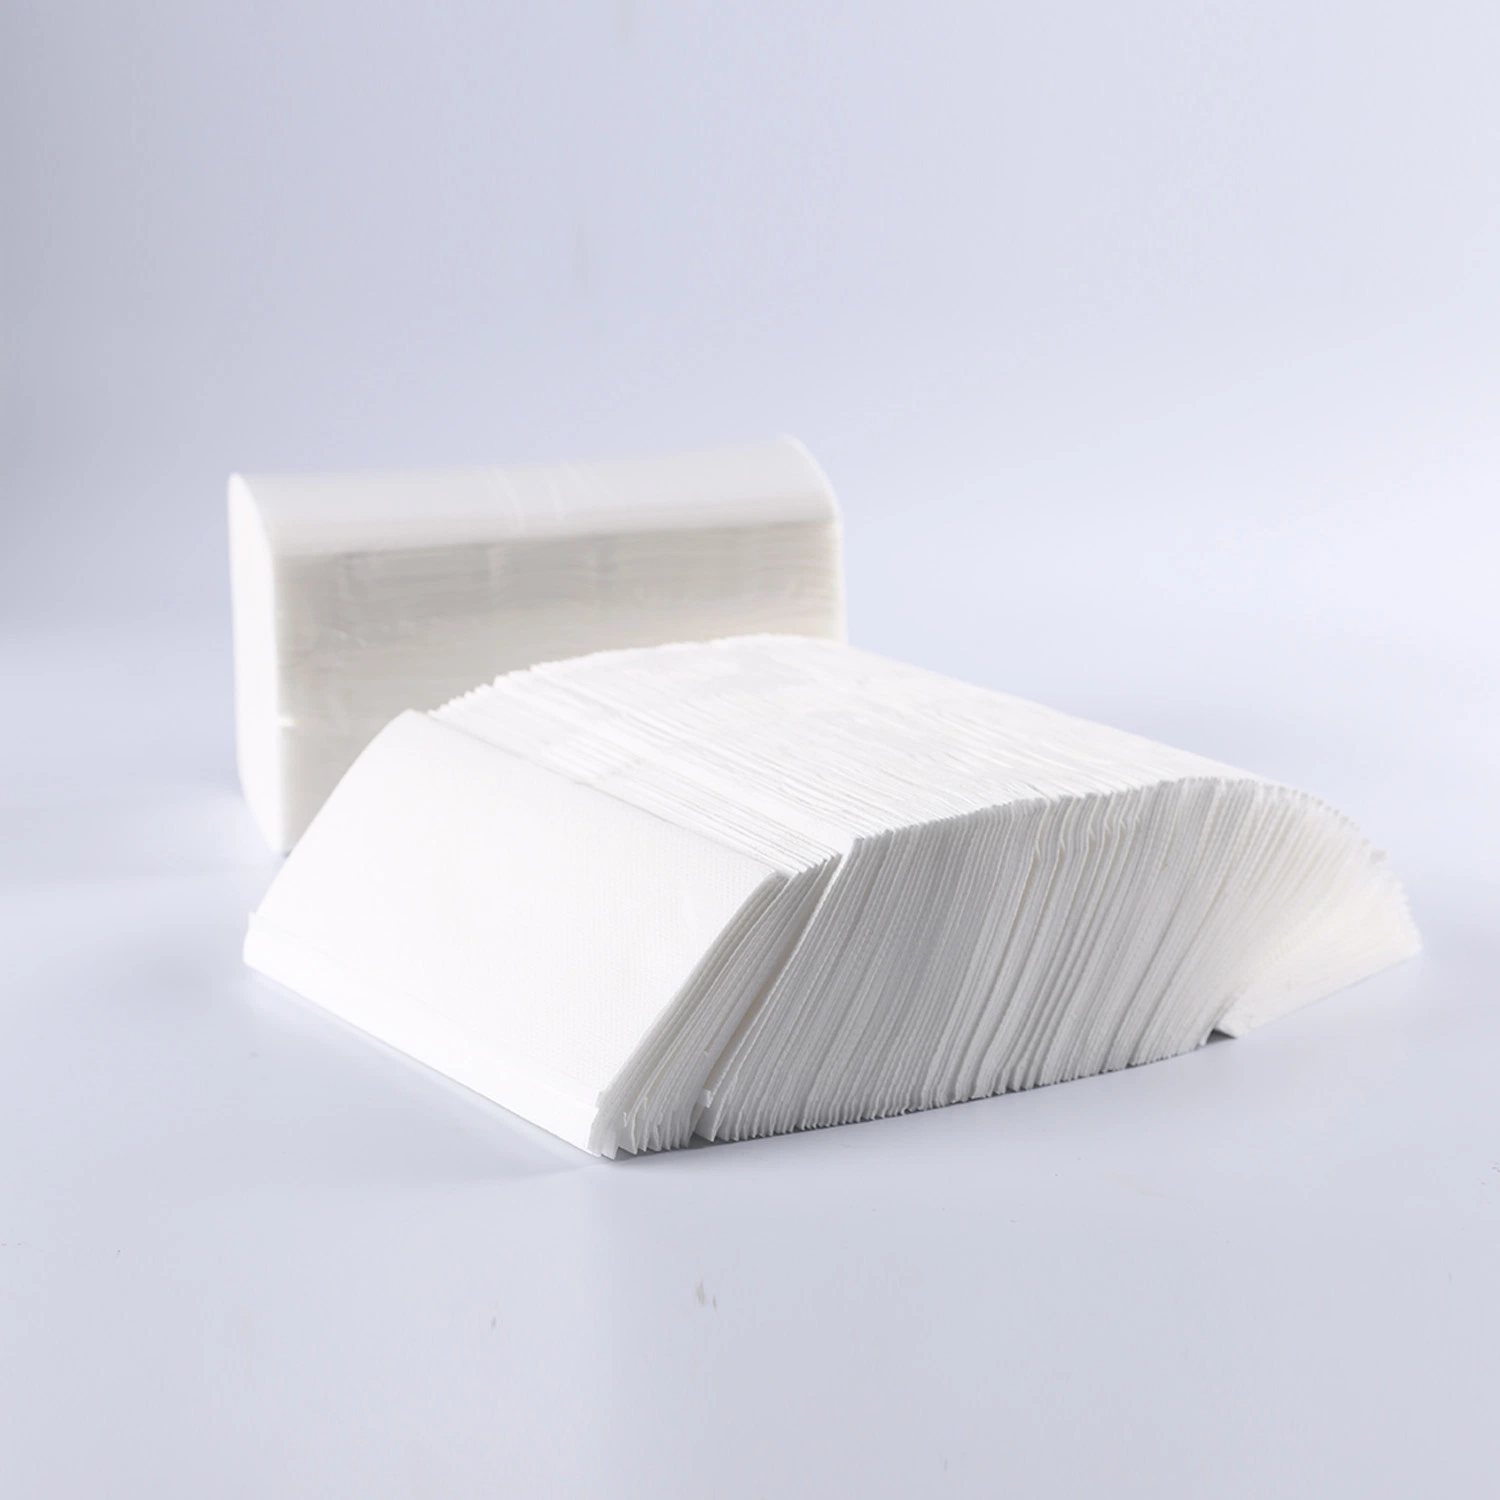 Z Fold Dispenser Paper Tissue Hand Towels/Z Fold Hand Paper Towels /Z Fold Paper Towels/Hand Towels Paper